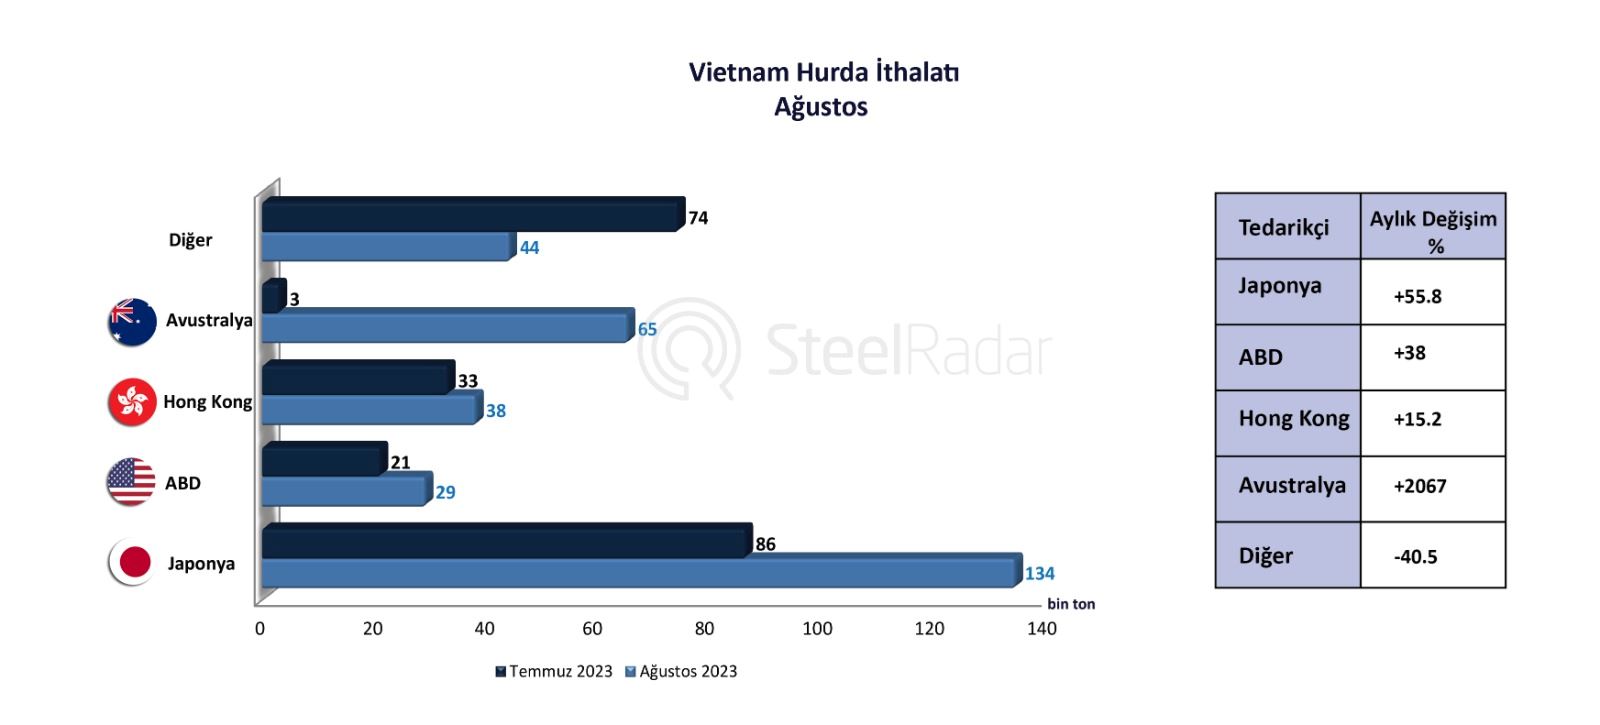 Vietnam'ın hurda ithalatı %43,1 arttı 